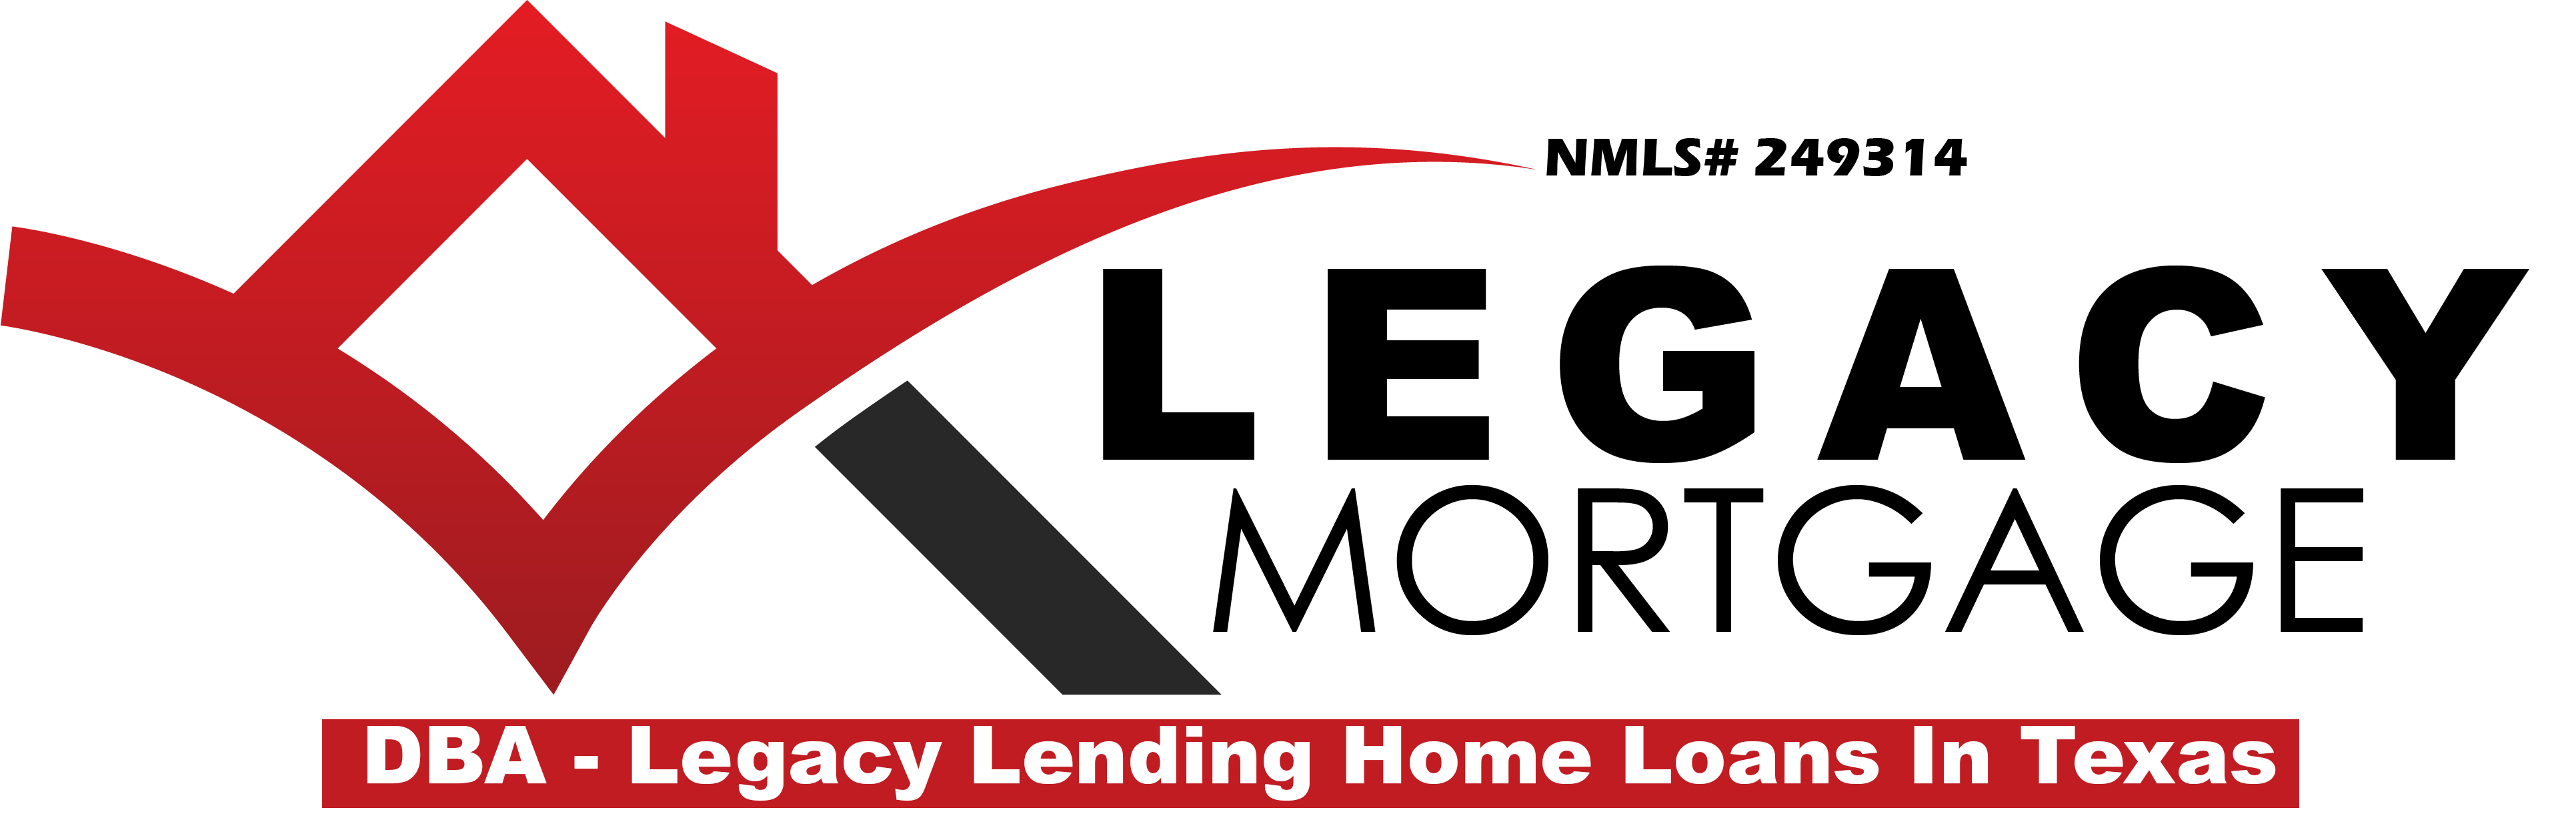 Legacy-Mortgage-website-Logo-2-retina